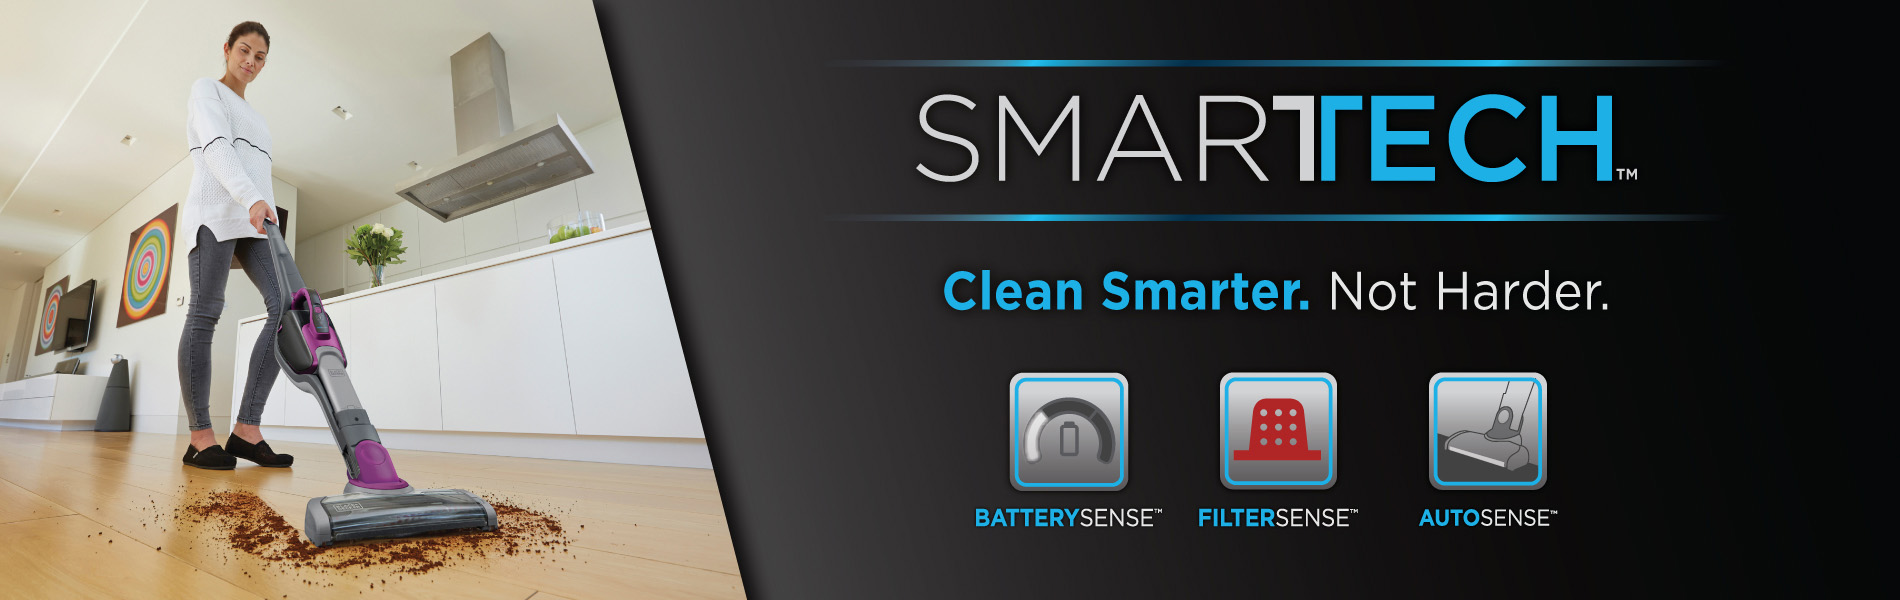 BLACK+DECKER™ Announces New Lithium Ion Vacuums with SMARTECH™ Sensing  Features